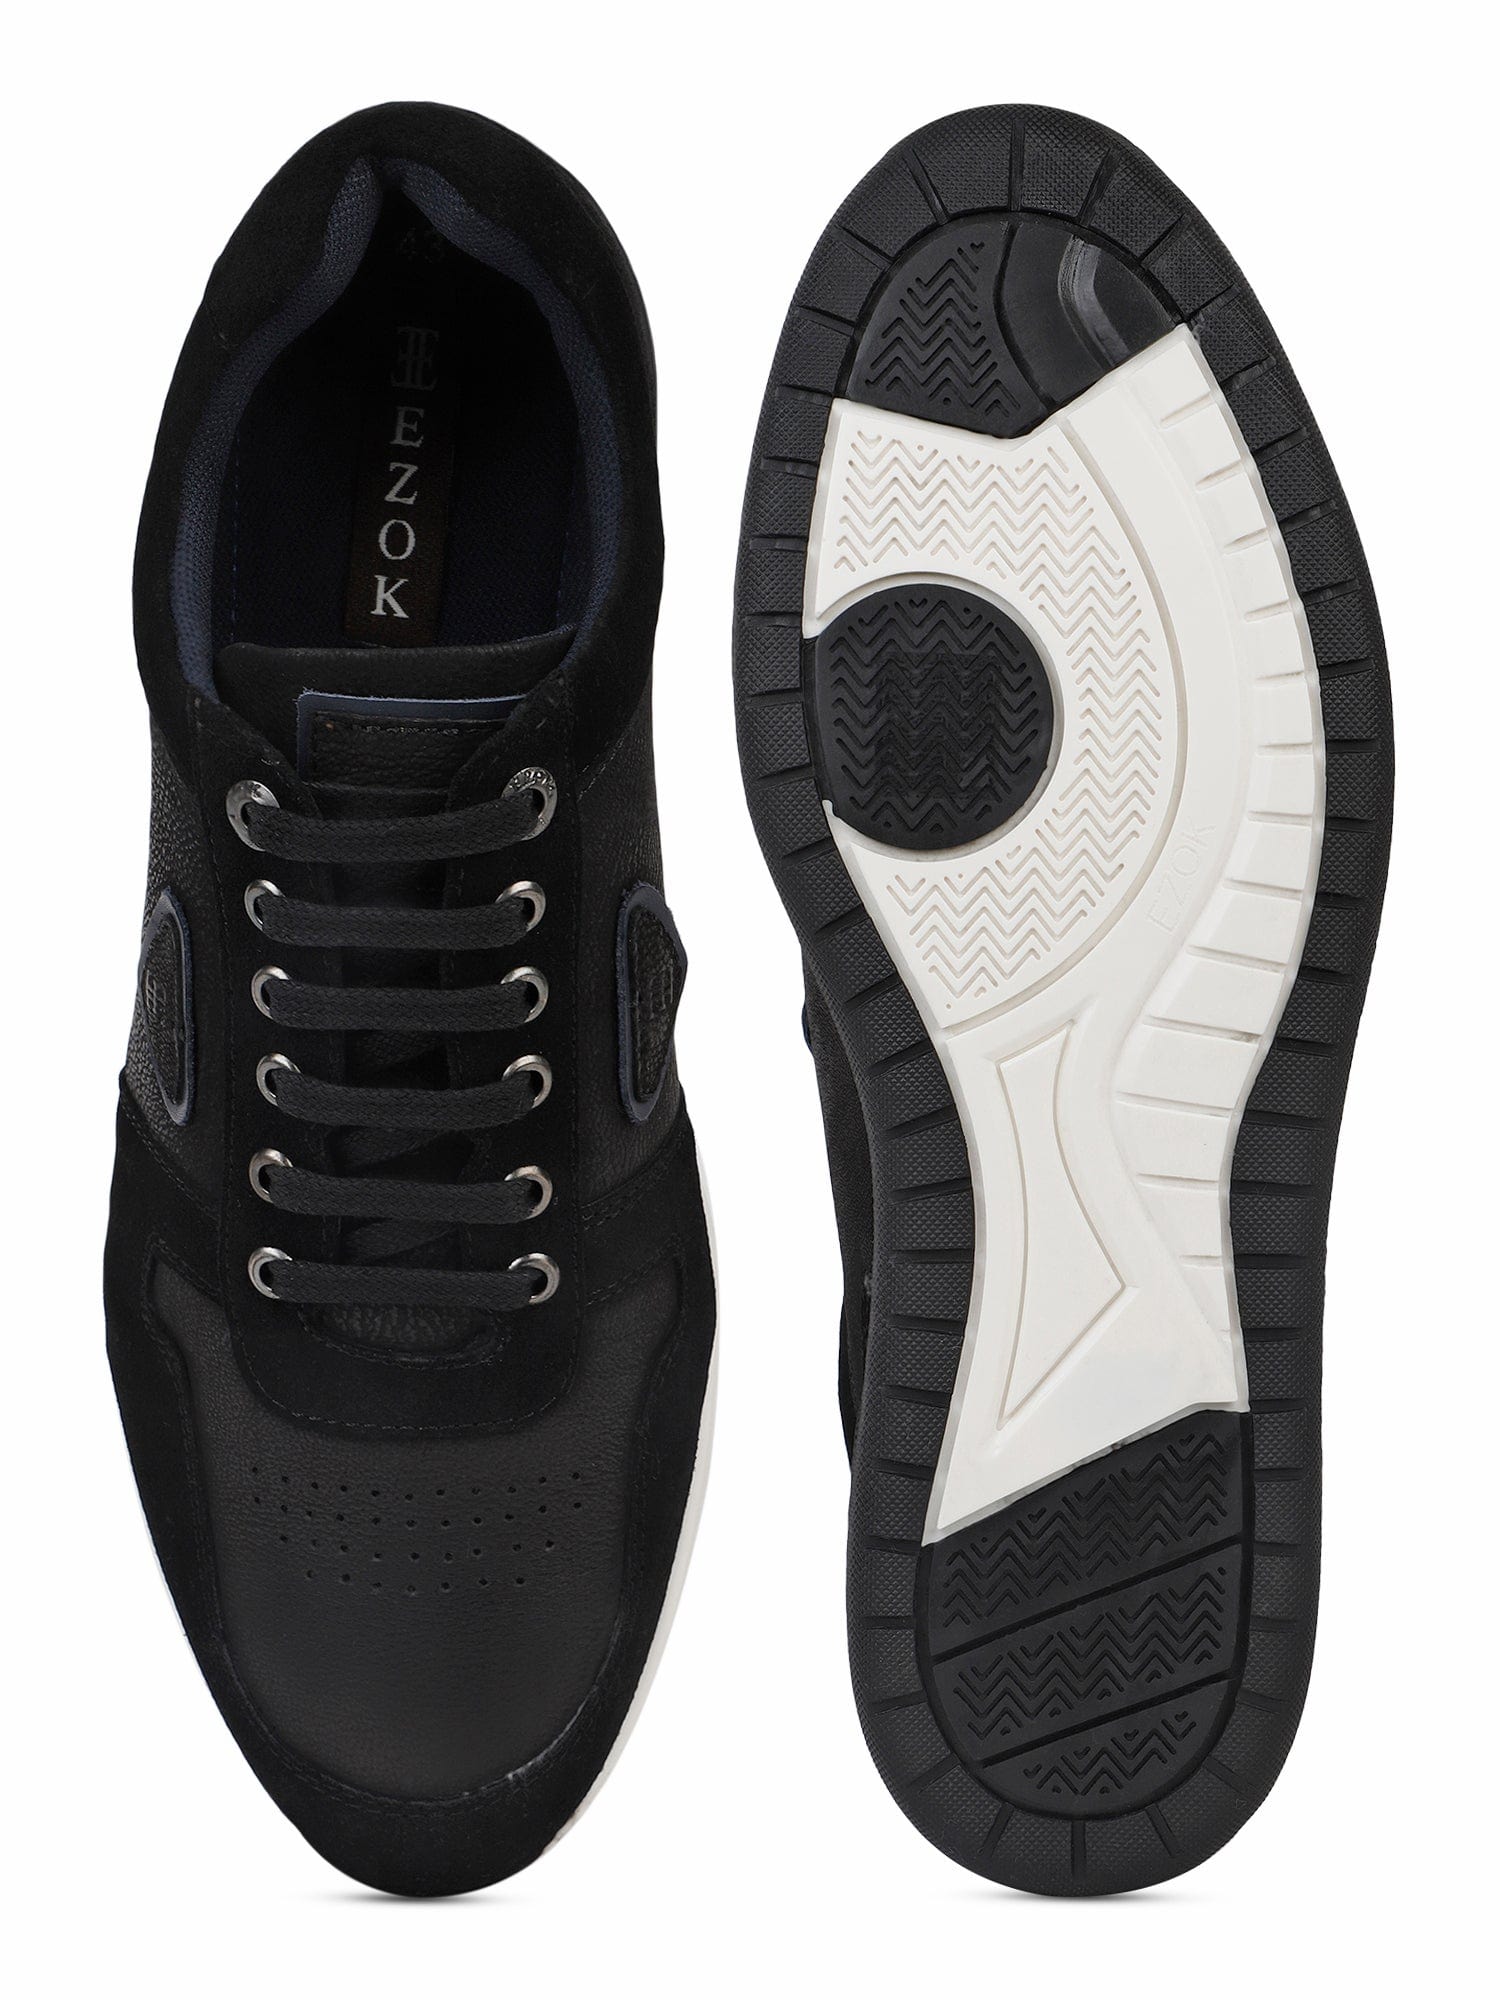 Ezok Men Black Sneaker Casual Shoes